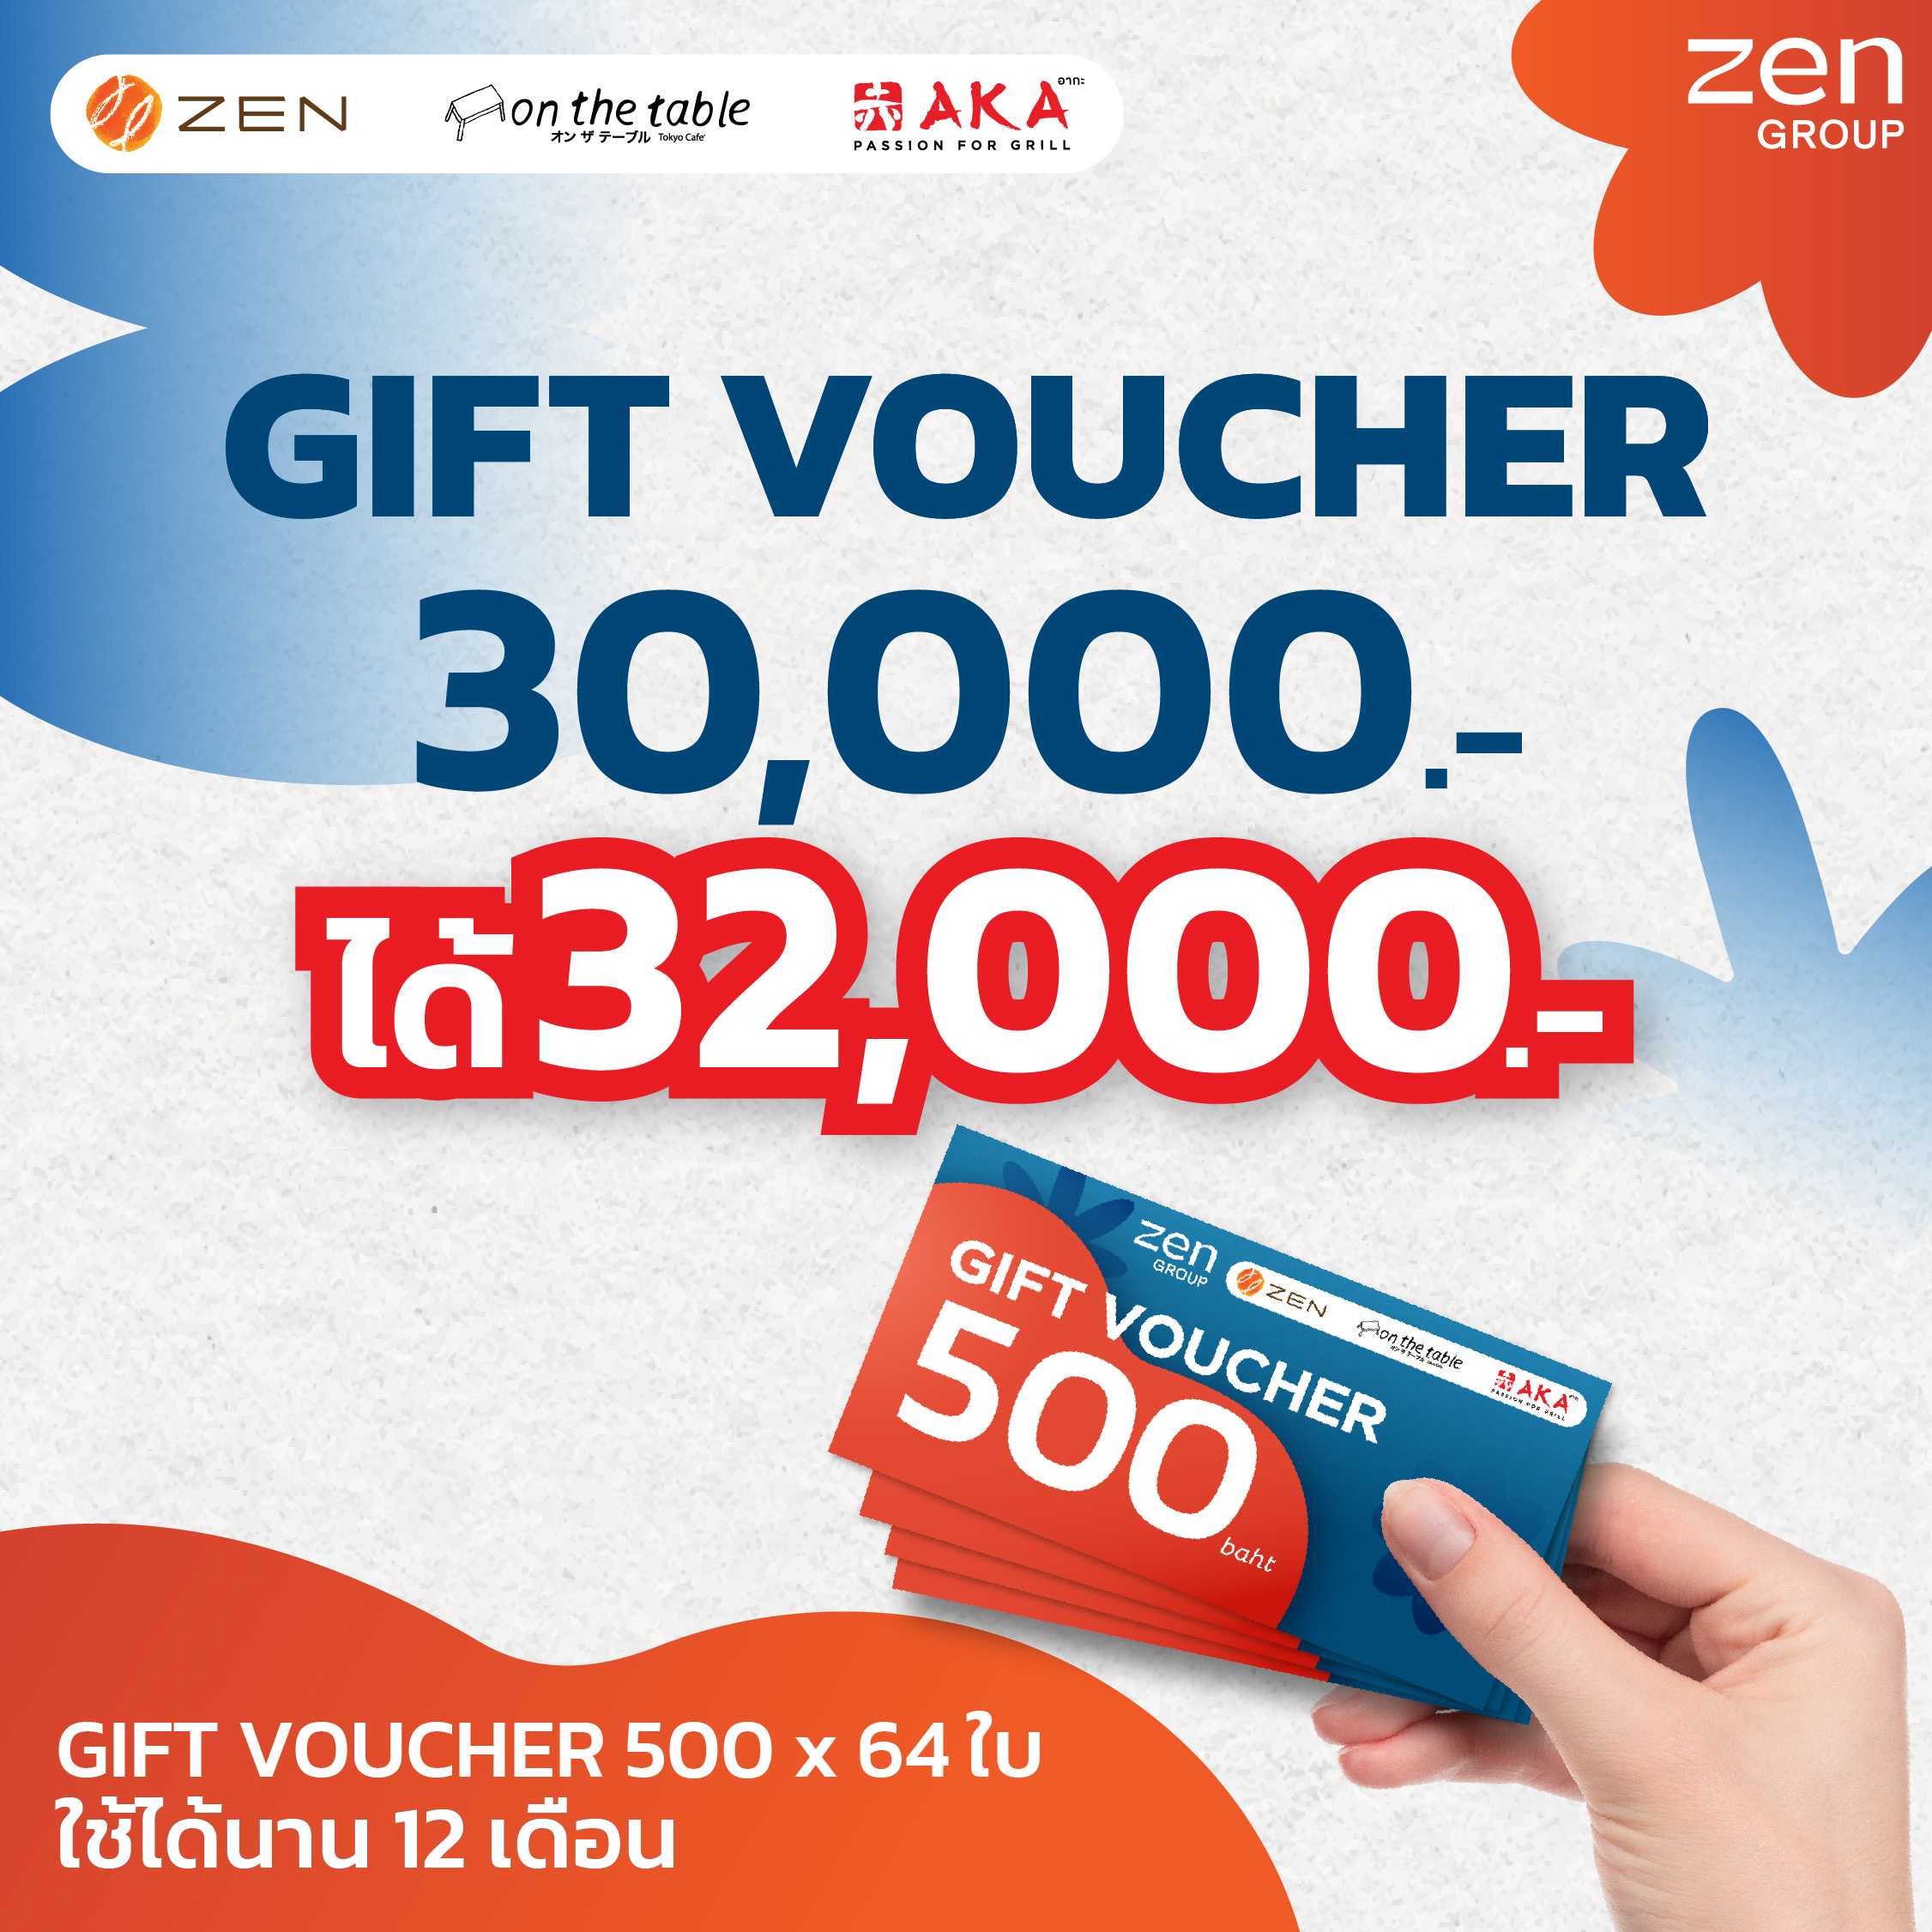 [Gift Voucher ZEN Group 32,000.-]บัตรกำนัลร้านอาหารในเครือเซ็นกรุ๊ปมูลค่า 30,000.- รับเพิ่ม 2,000.-